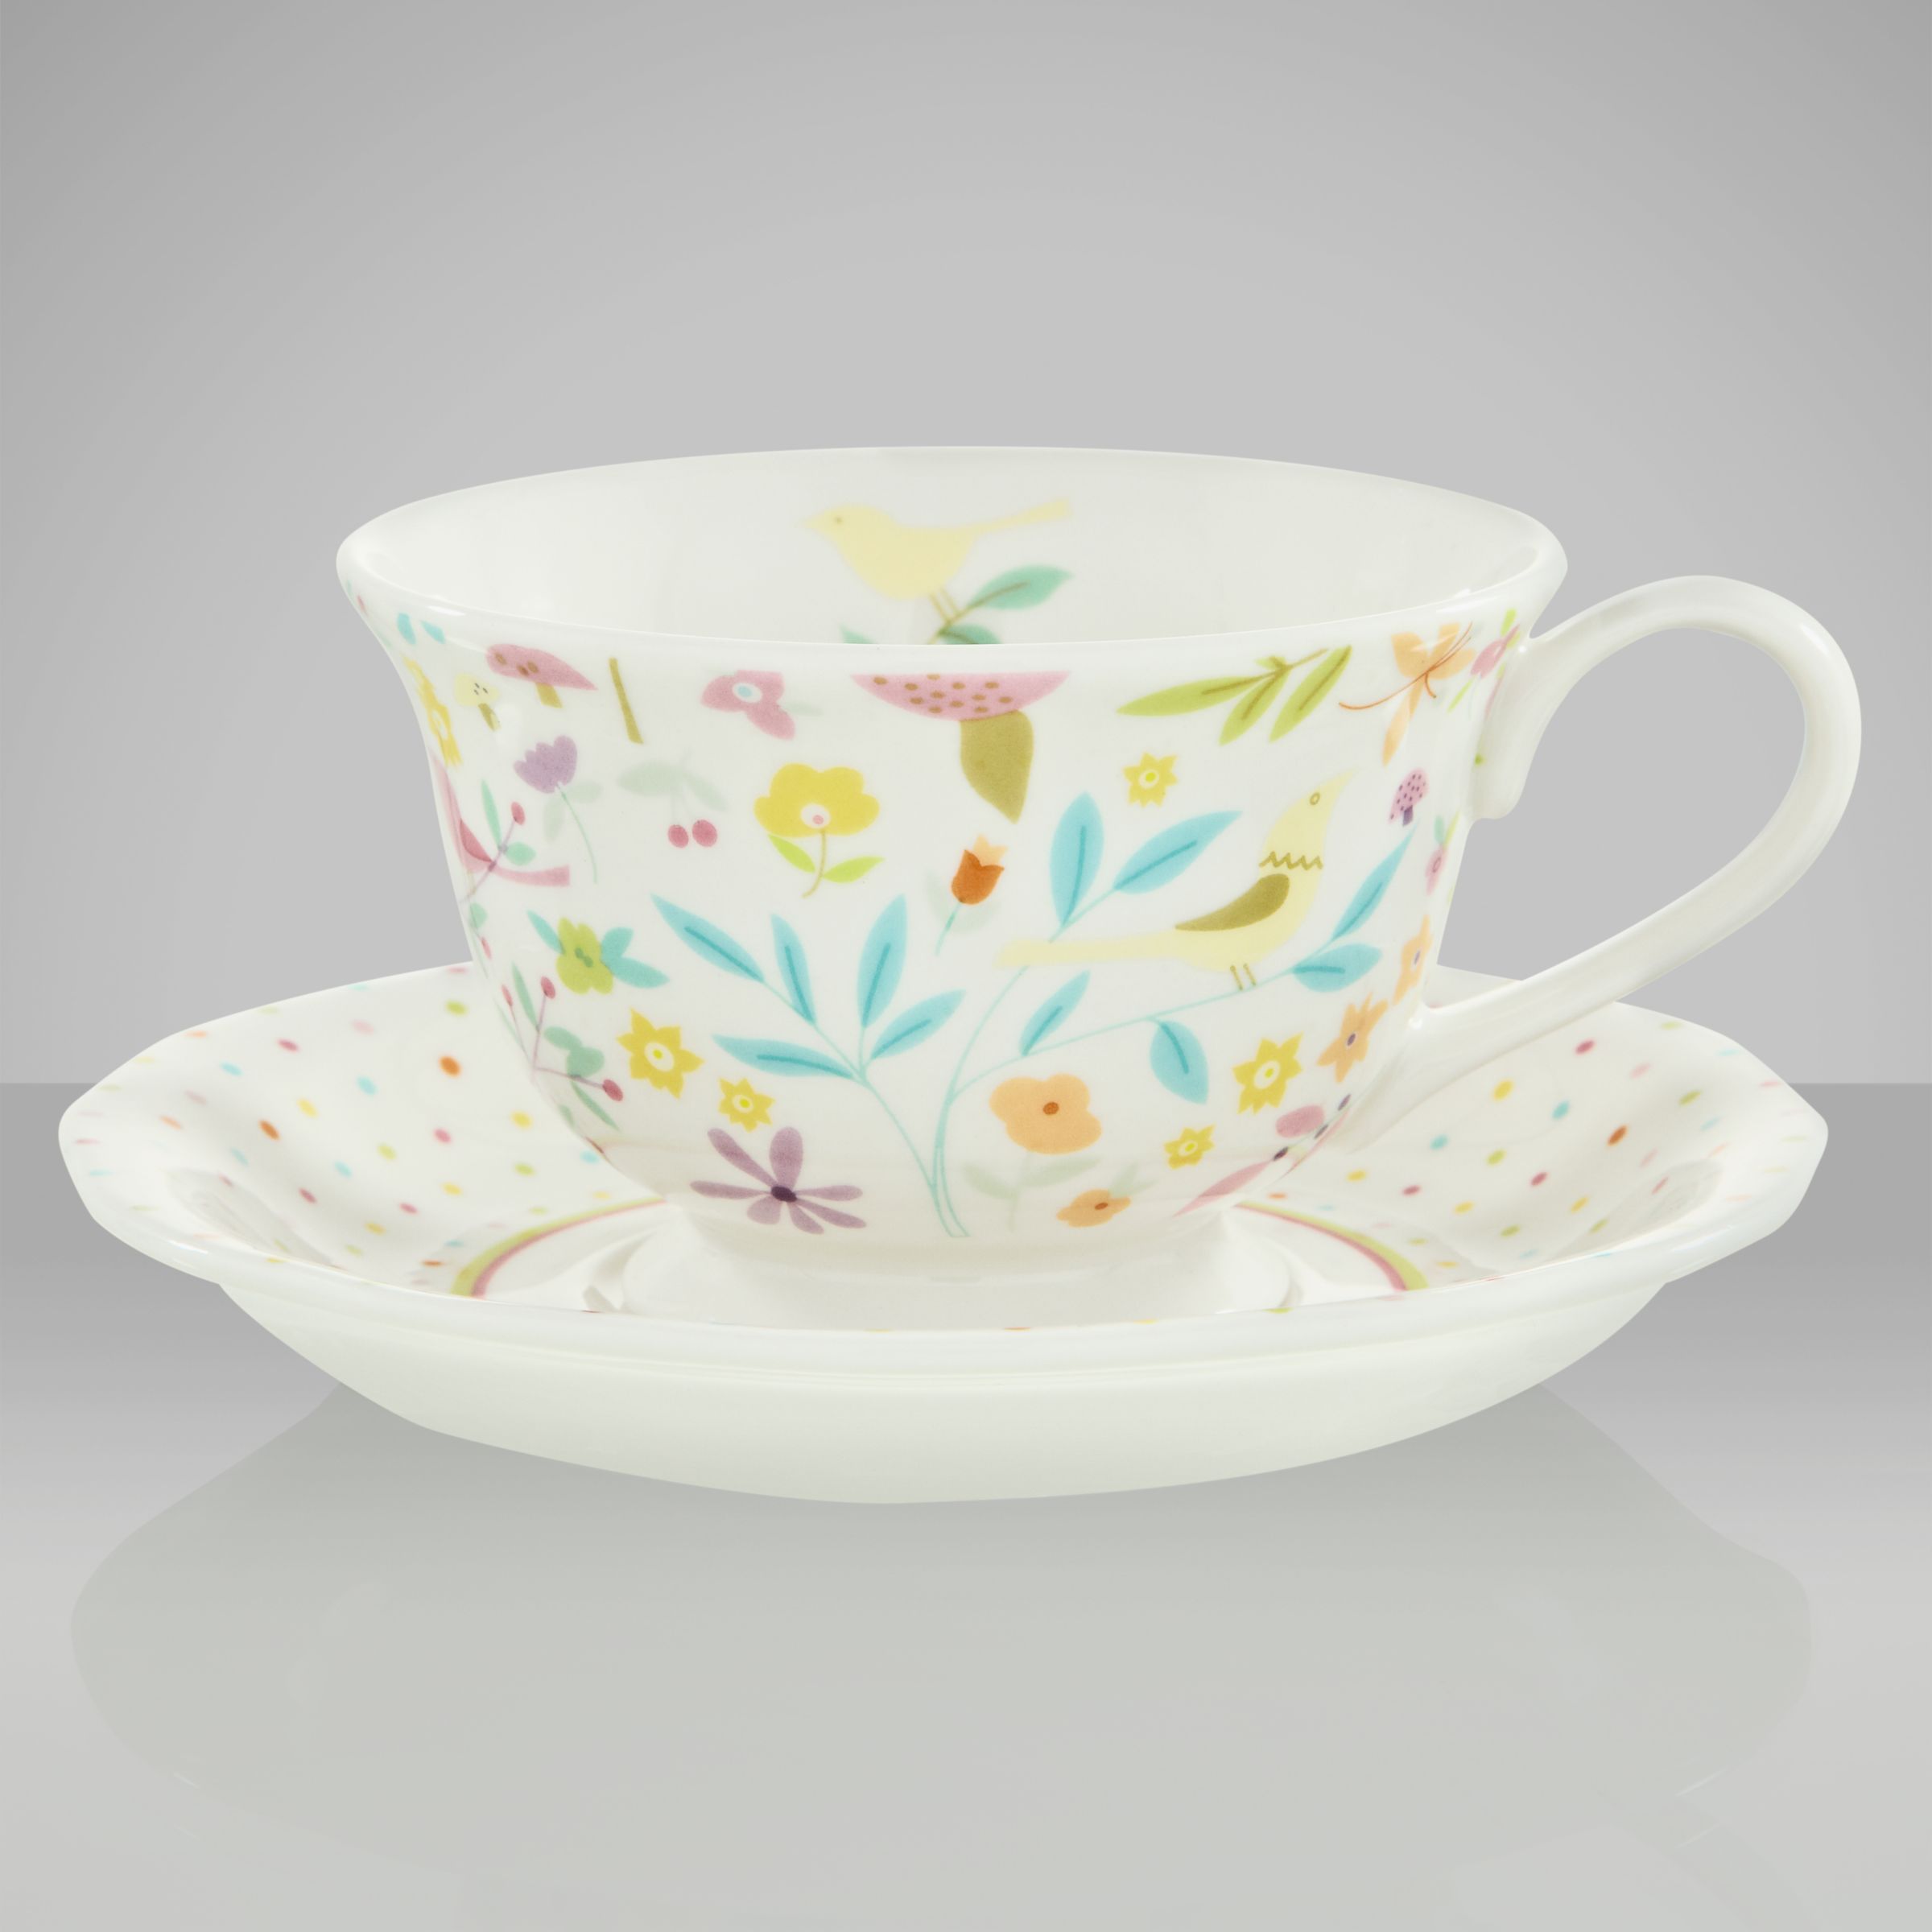 Portmeirion Secret Garden Porcelain Teacup and